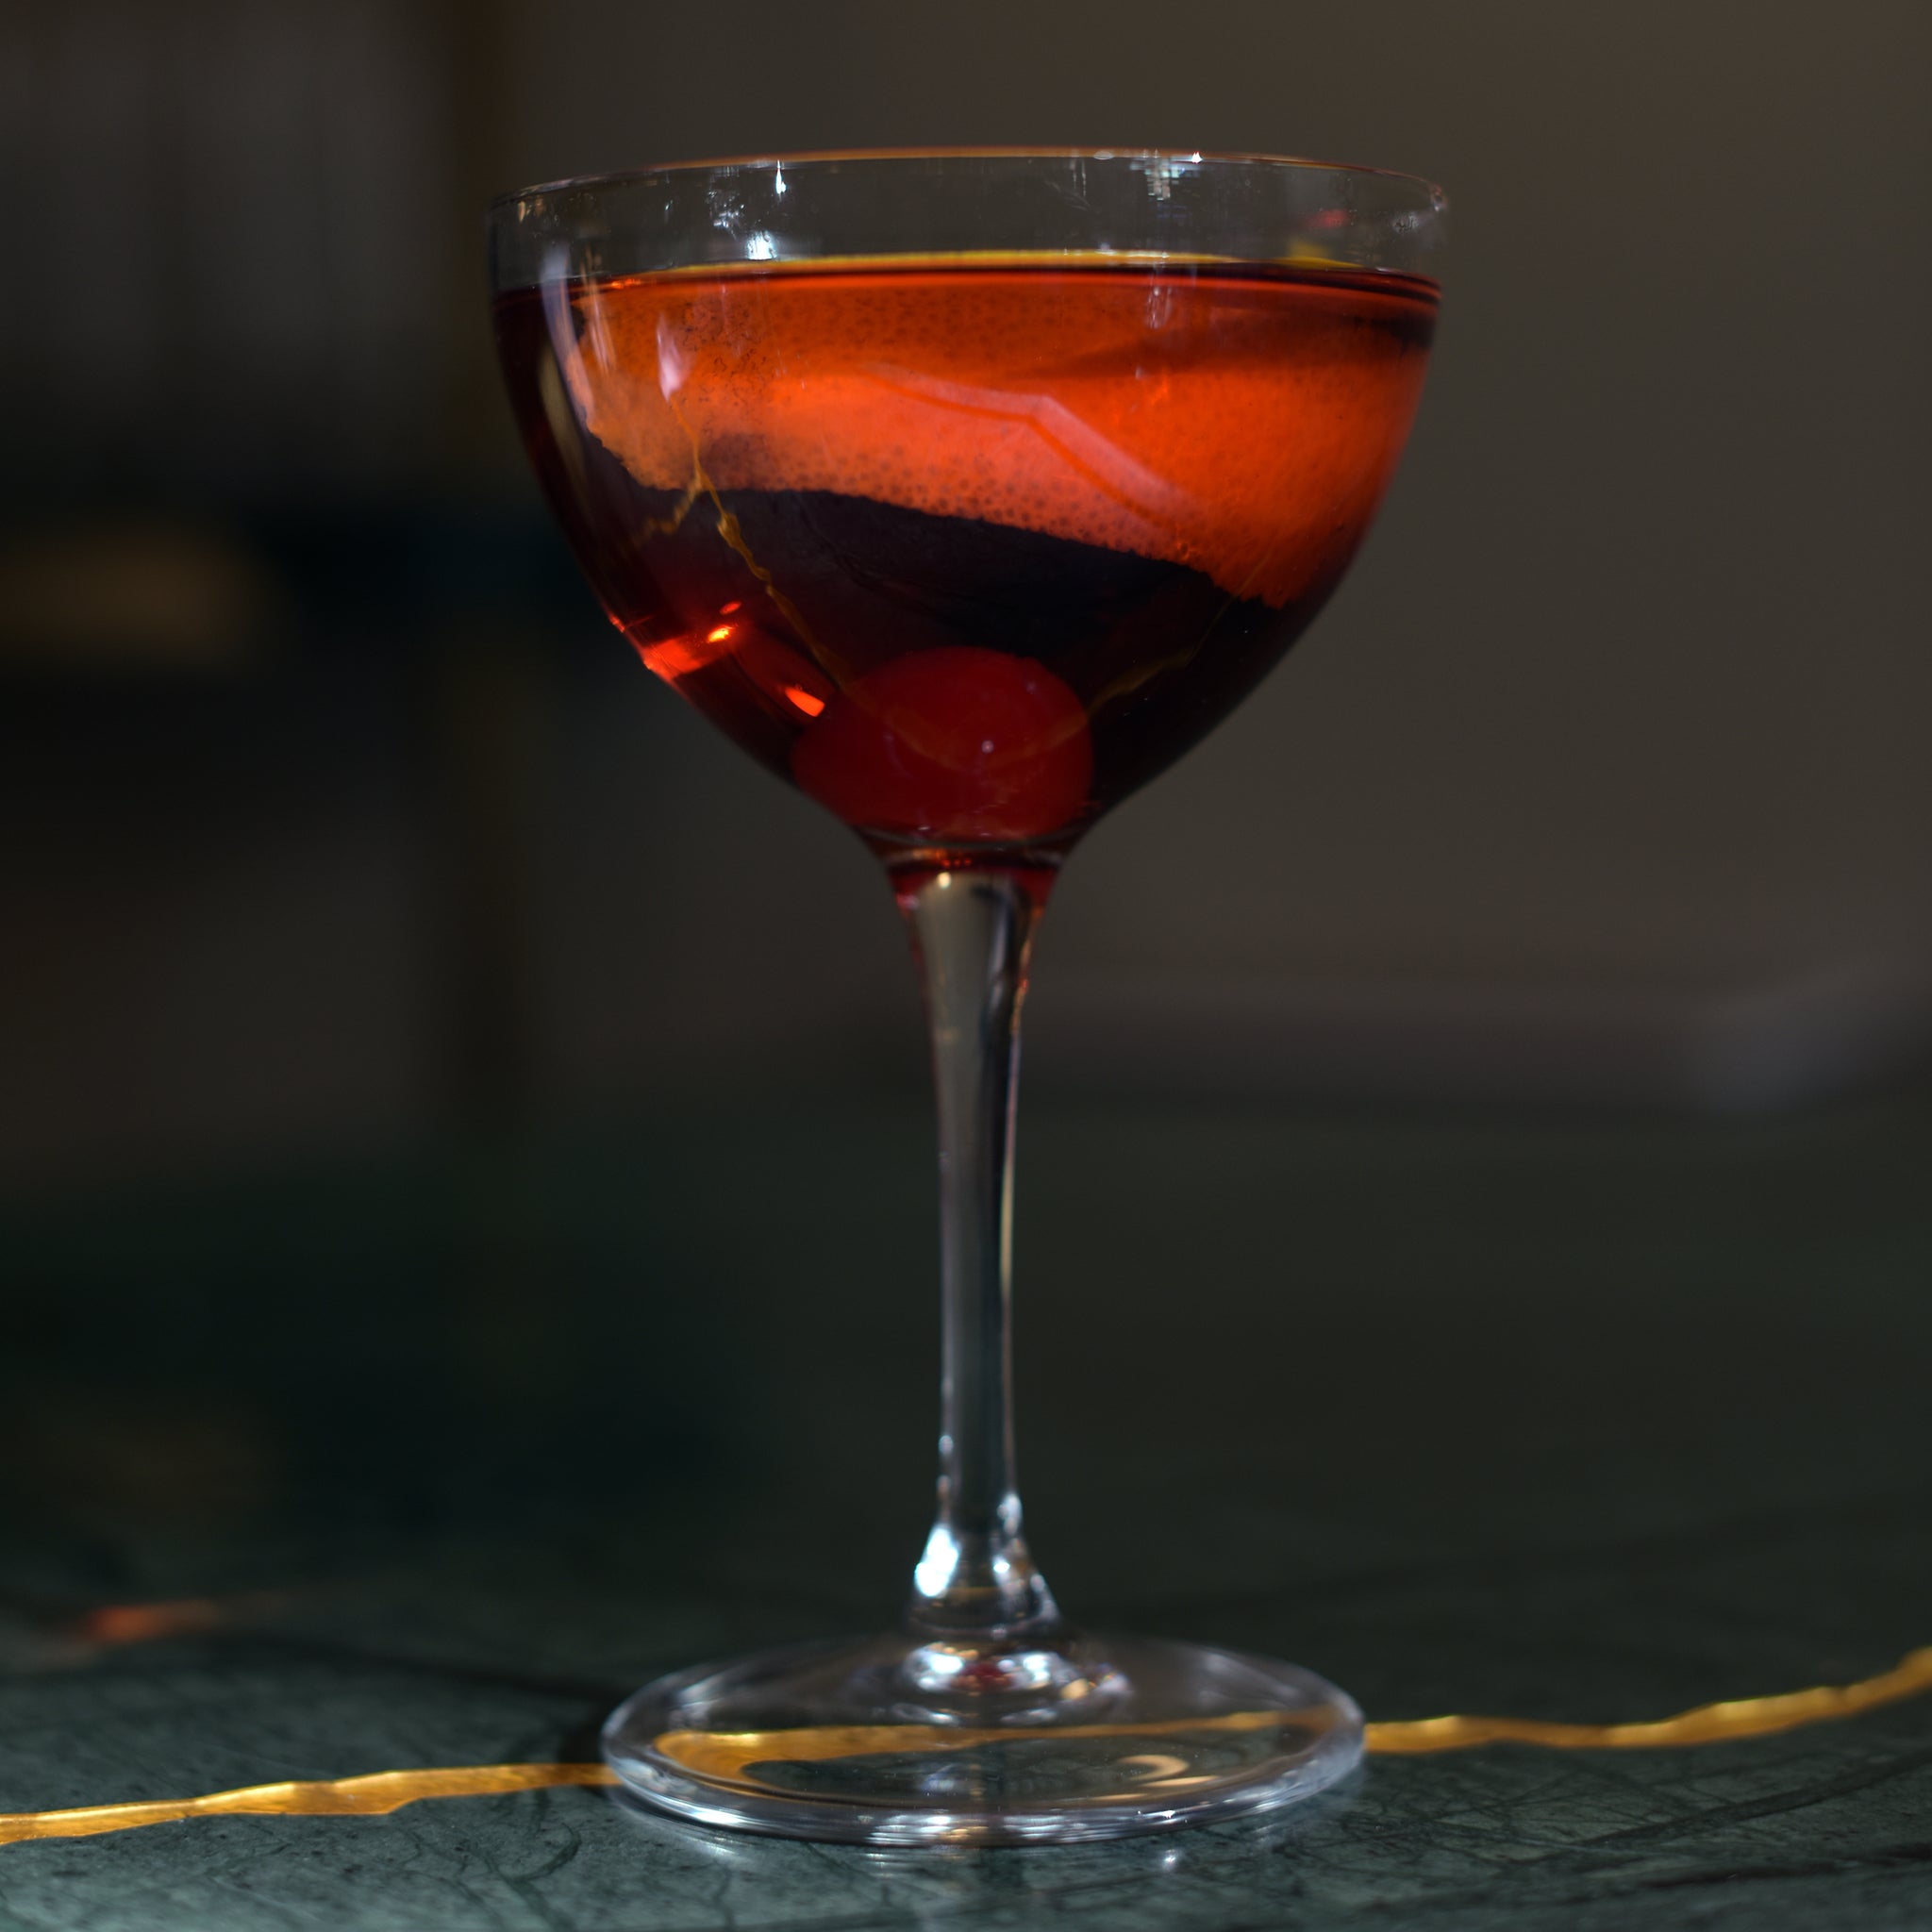 Bartender 8 oz. Novecento Martini Cocktail Glasses (Set of 4)